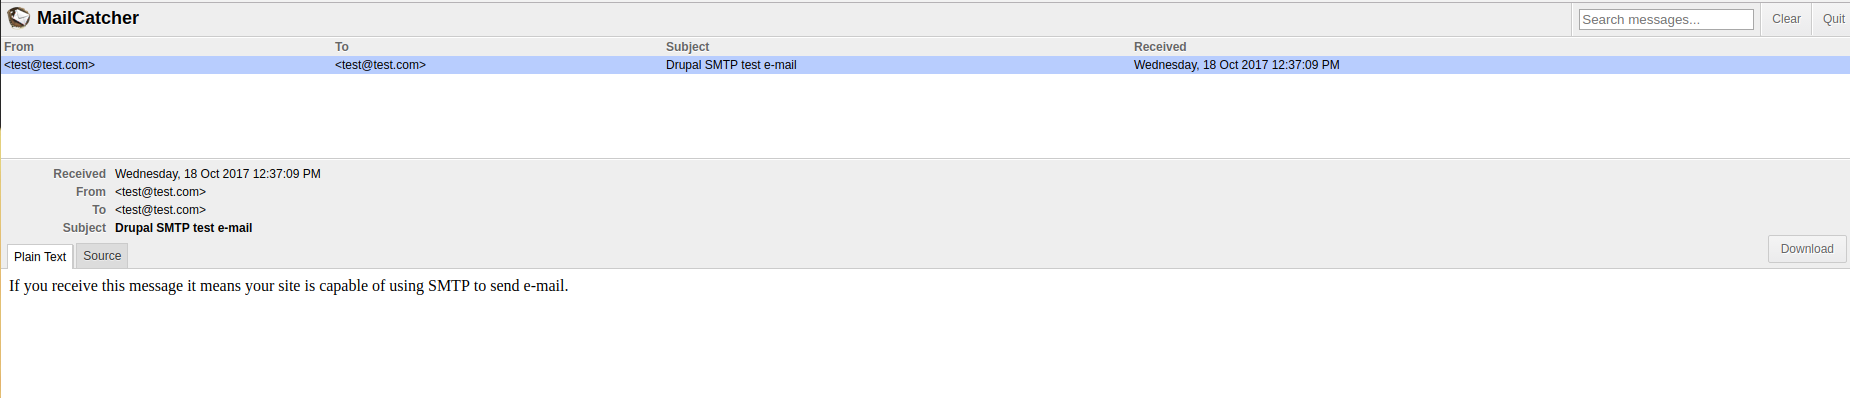 Default test e-mail message in the developer’s inbox.